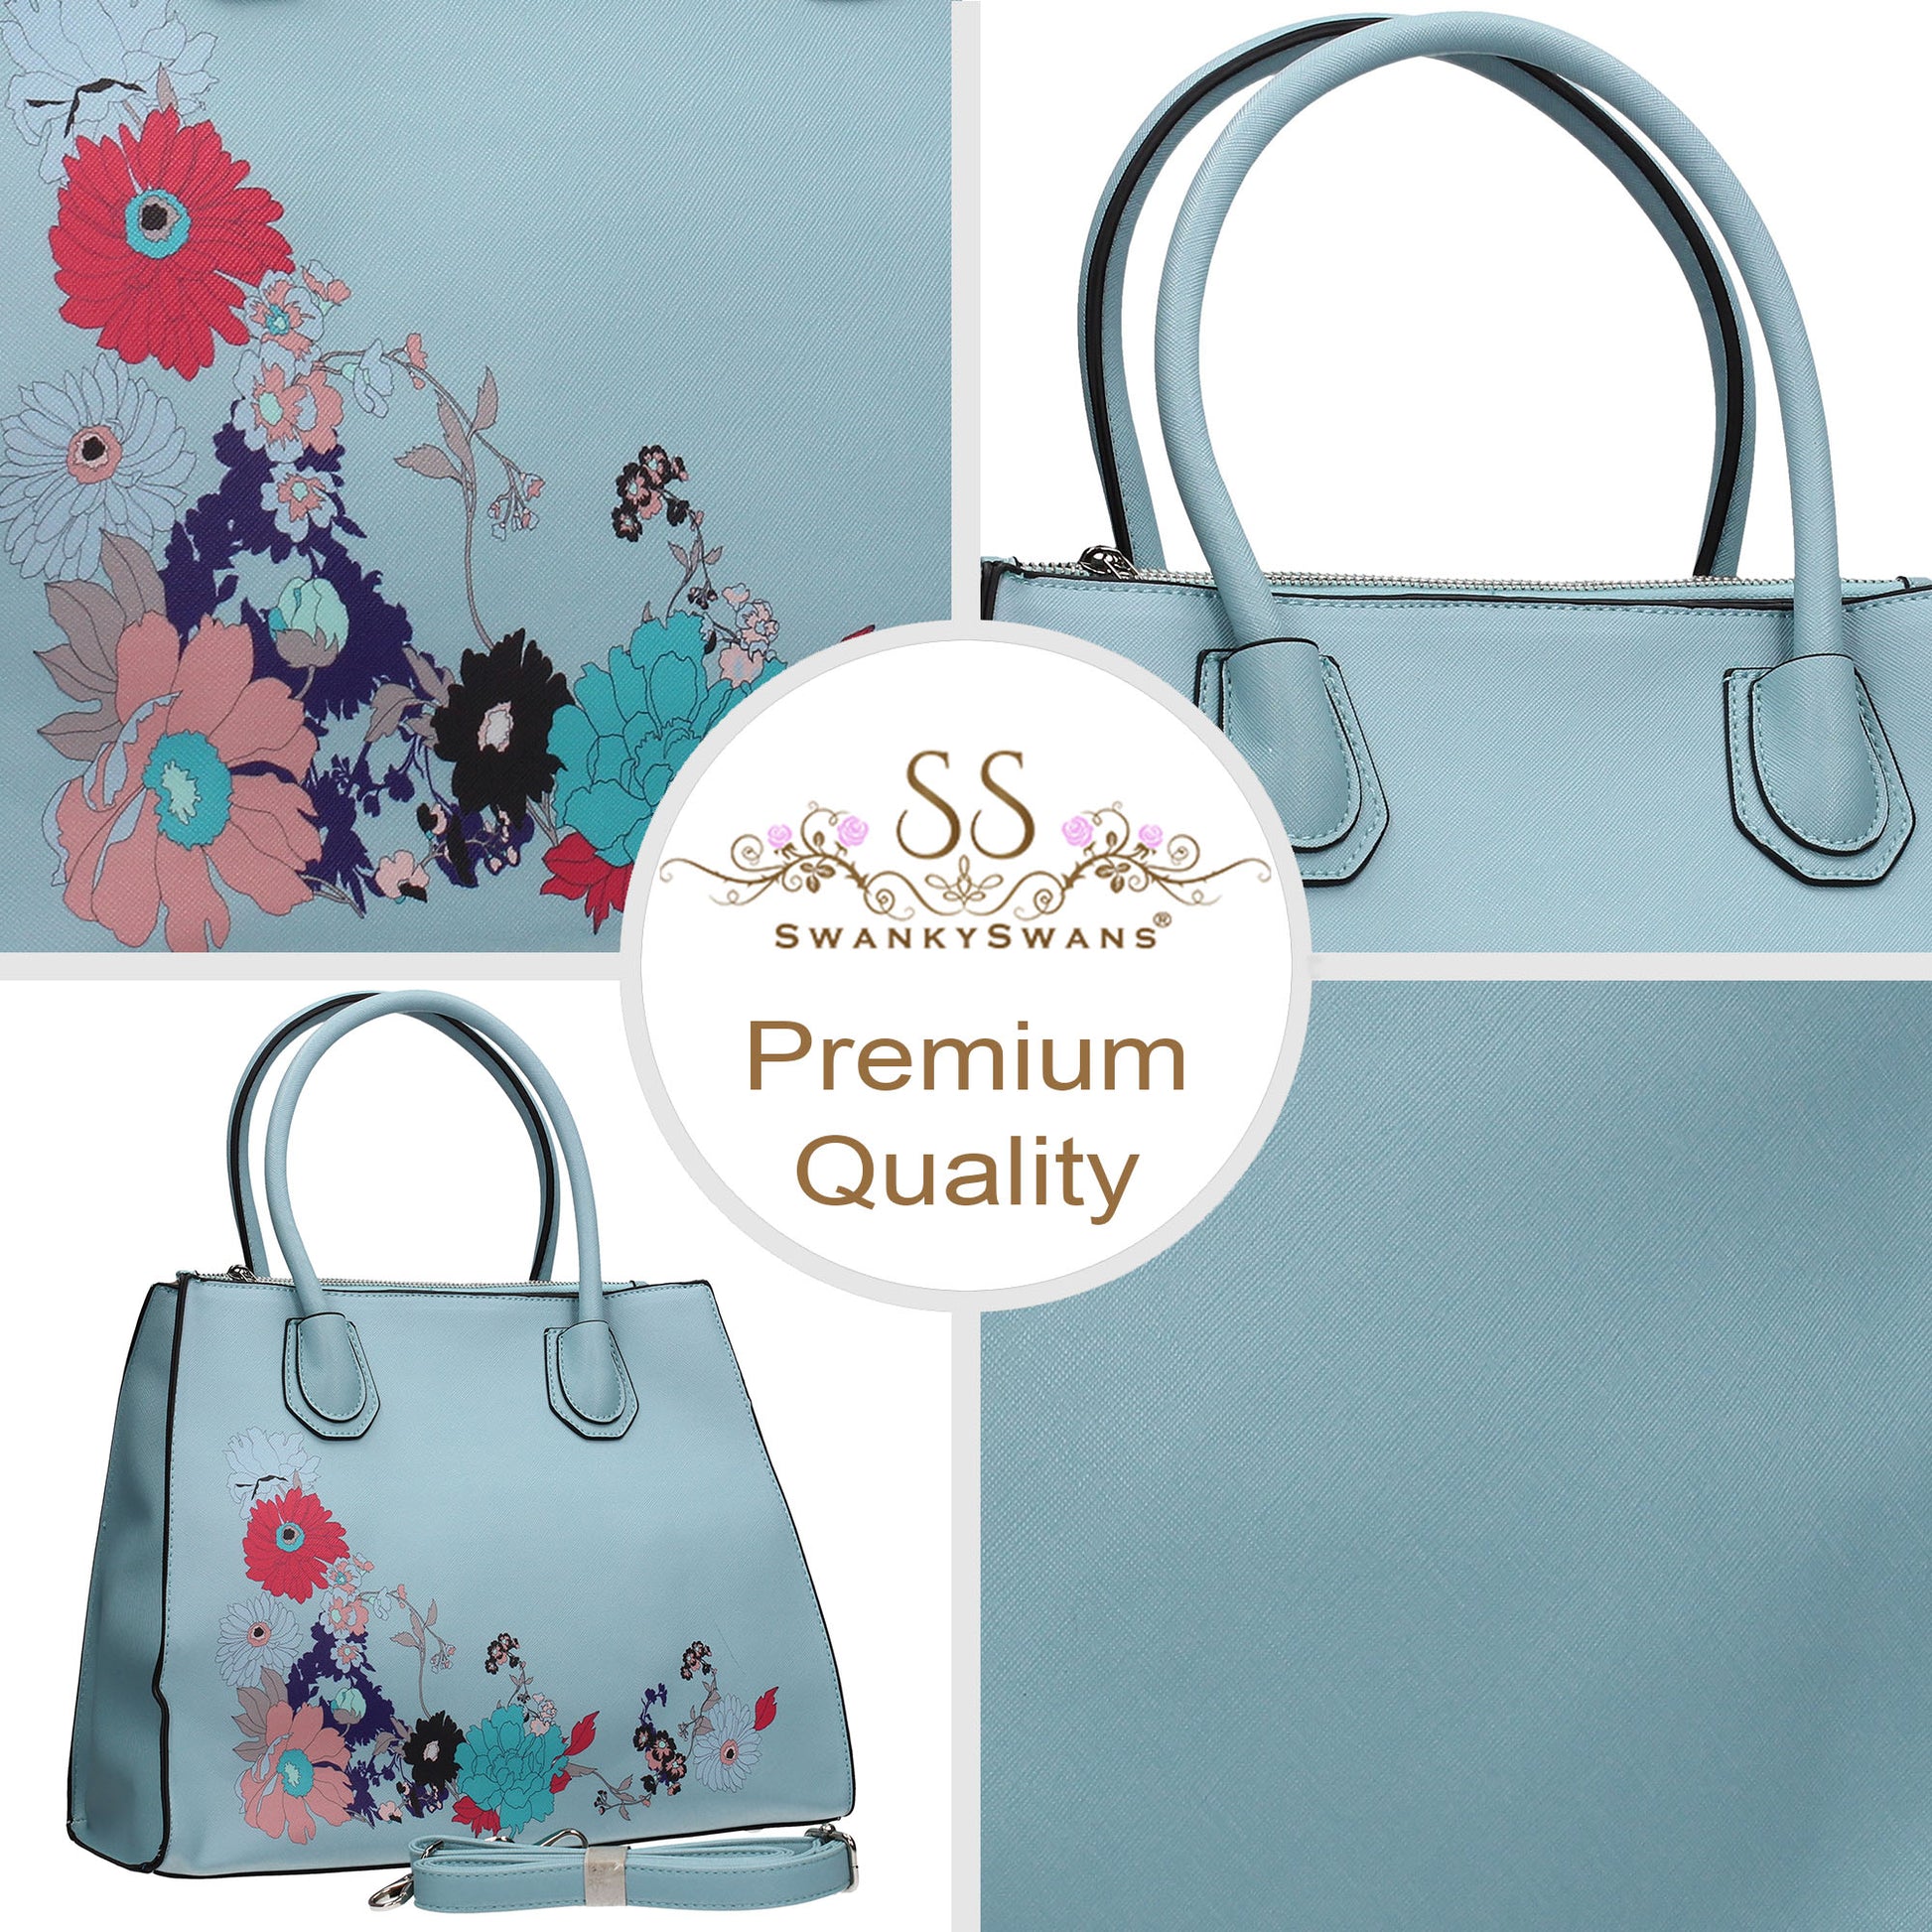 Hanna Floral Handbag Pale BlueBeautiful Cute Animal Faux Leather Clutch Bag Handles Strap Summer School